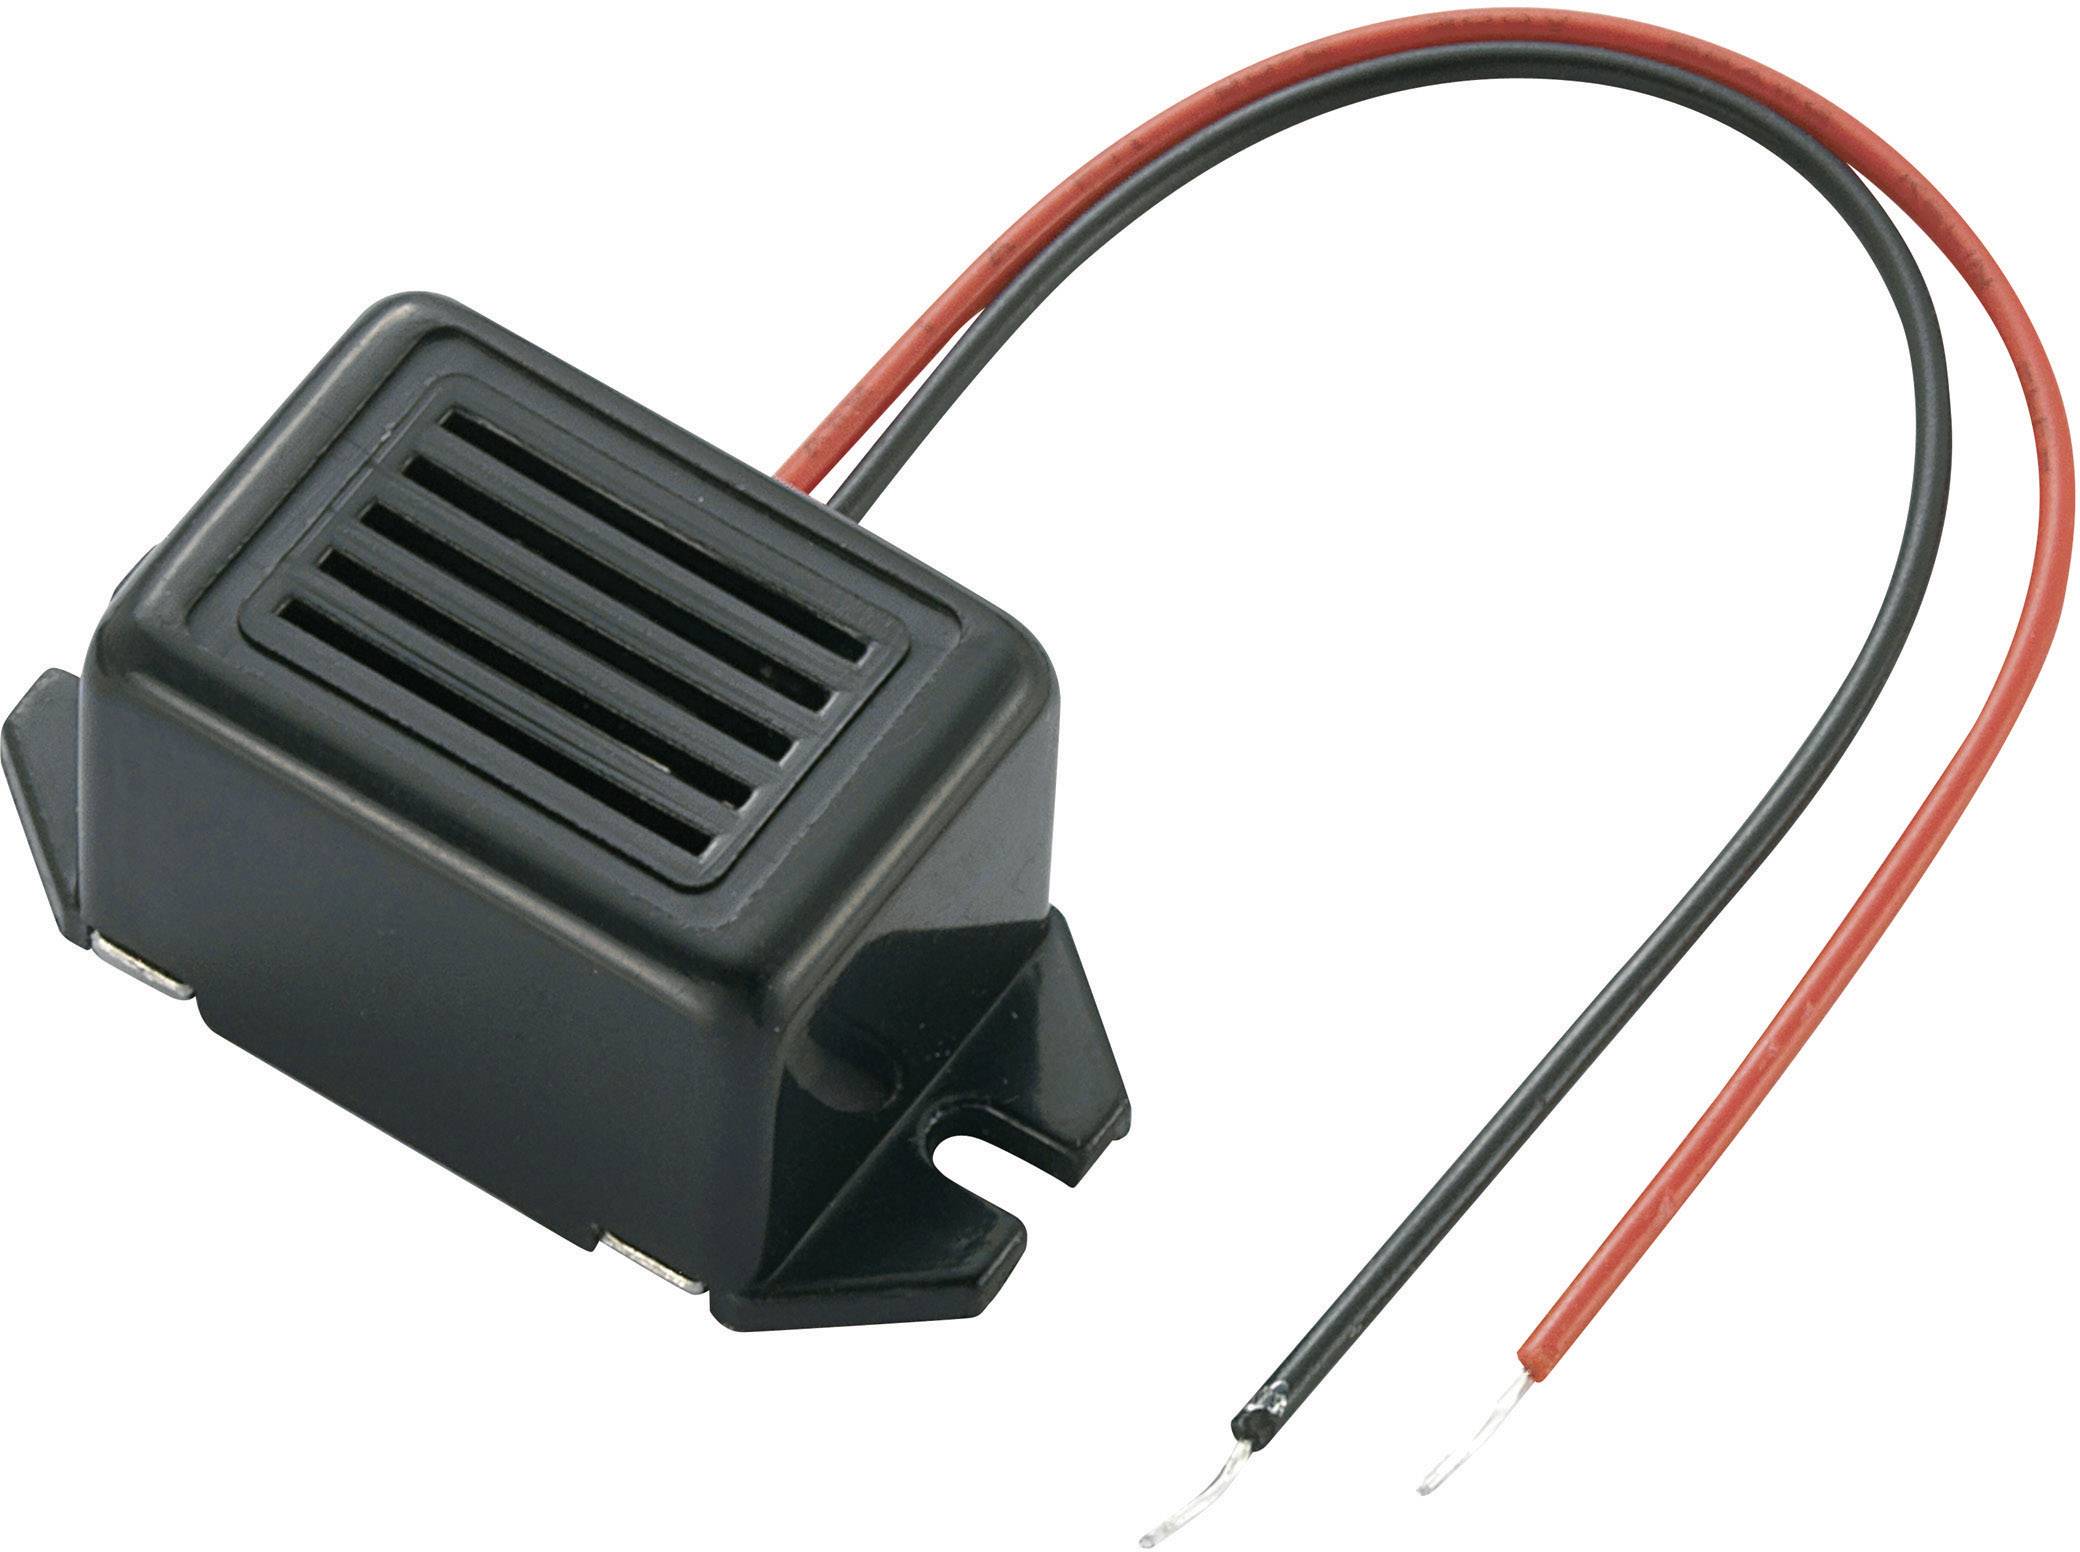 KEPO KPMB-G2345L1-K6440 Miniatur Summer Geräusch-Entwicklung: 70 dB Spannung: 4.5 V Dauerton 1